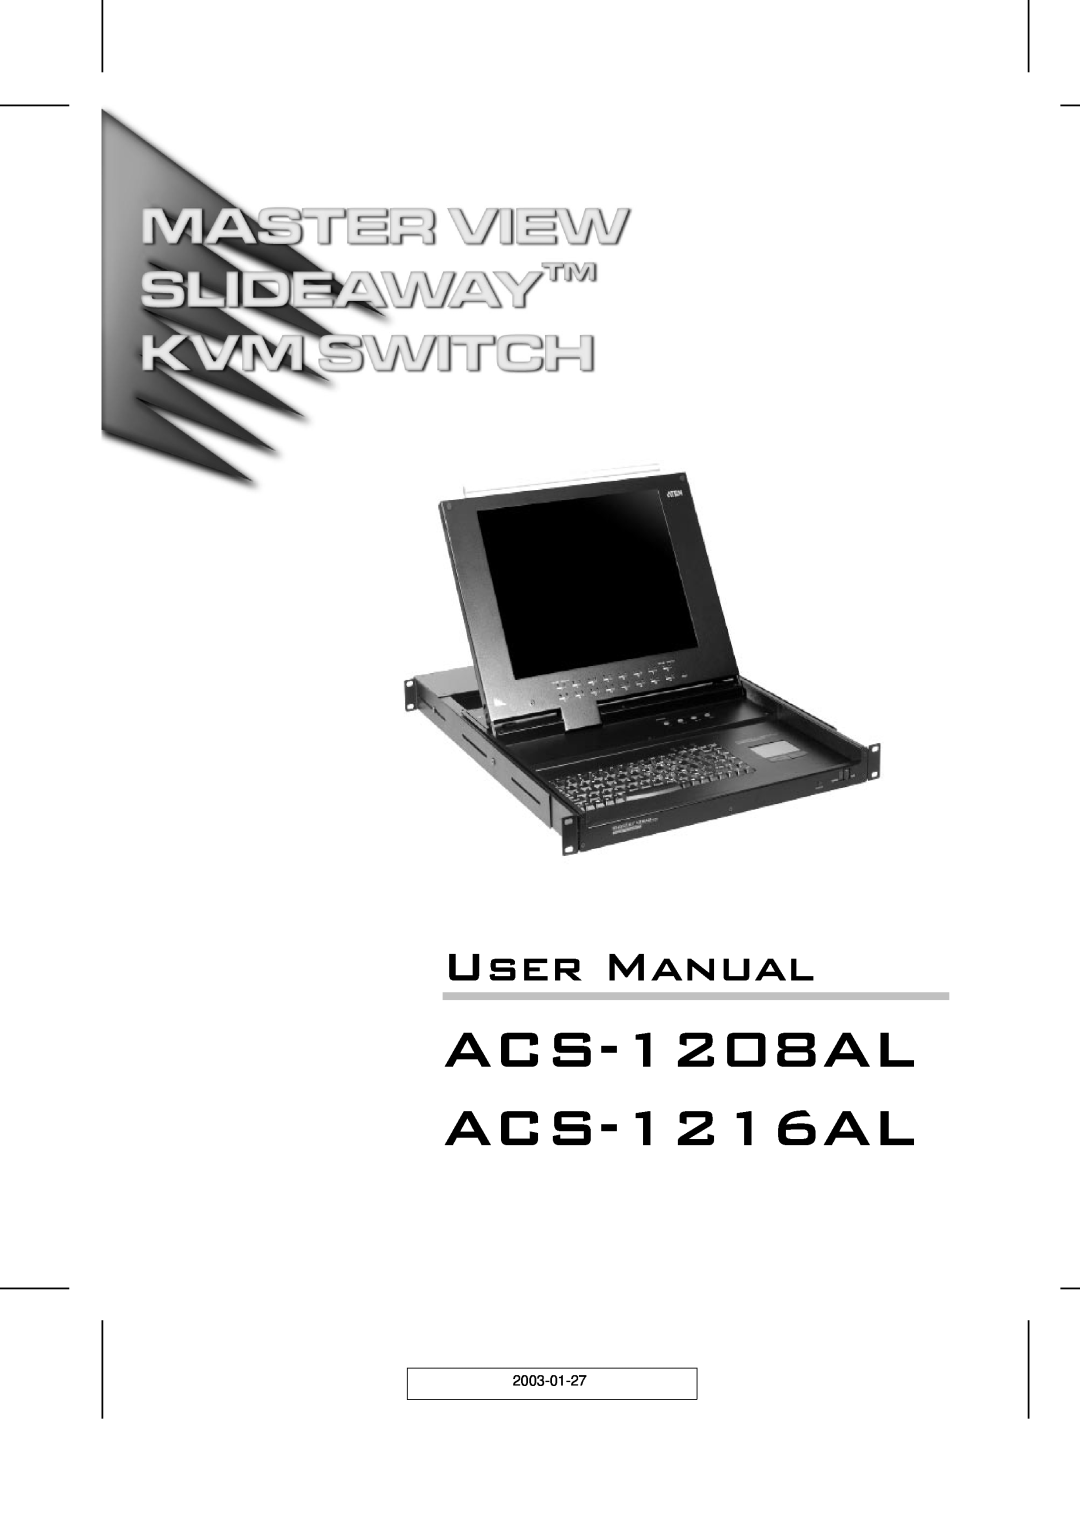 ATEN Technology user manual ACS-1208AL ACS-1216AL, User Manual 